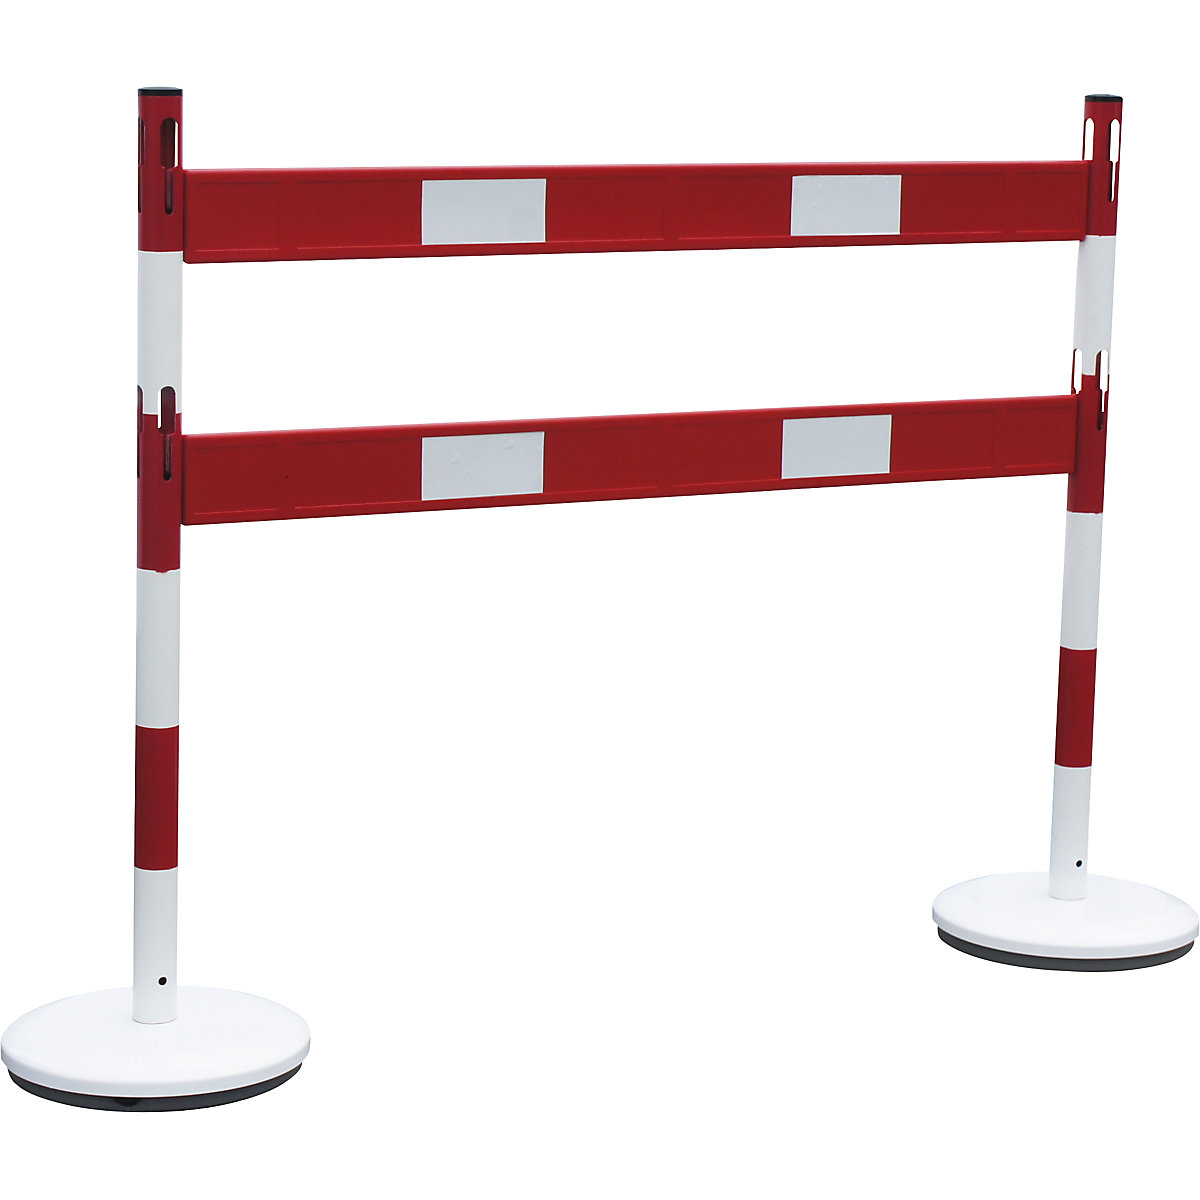 Barrier post set with rails – VISO